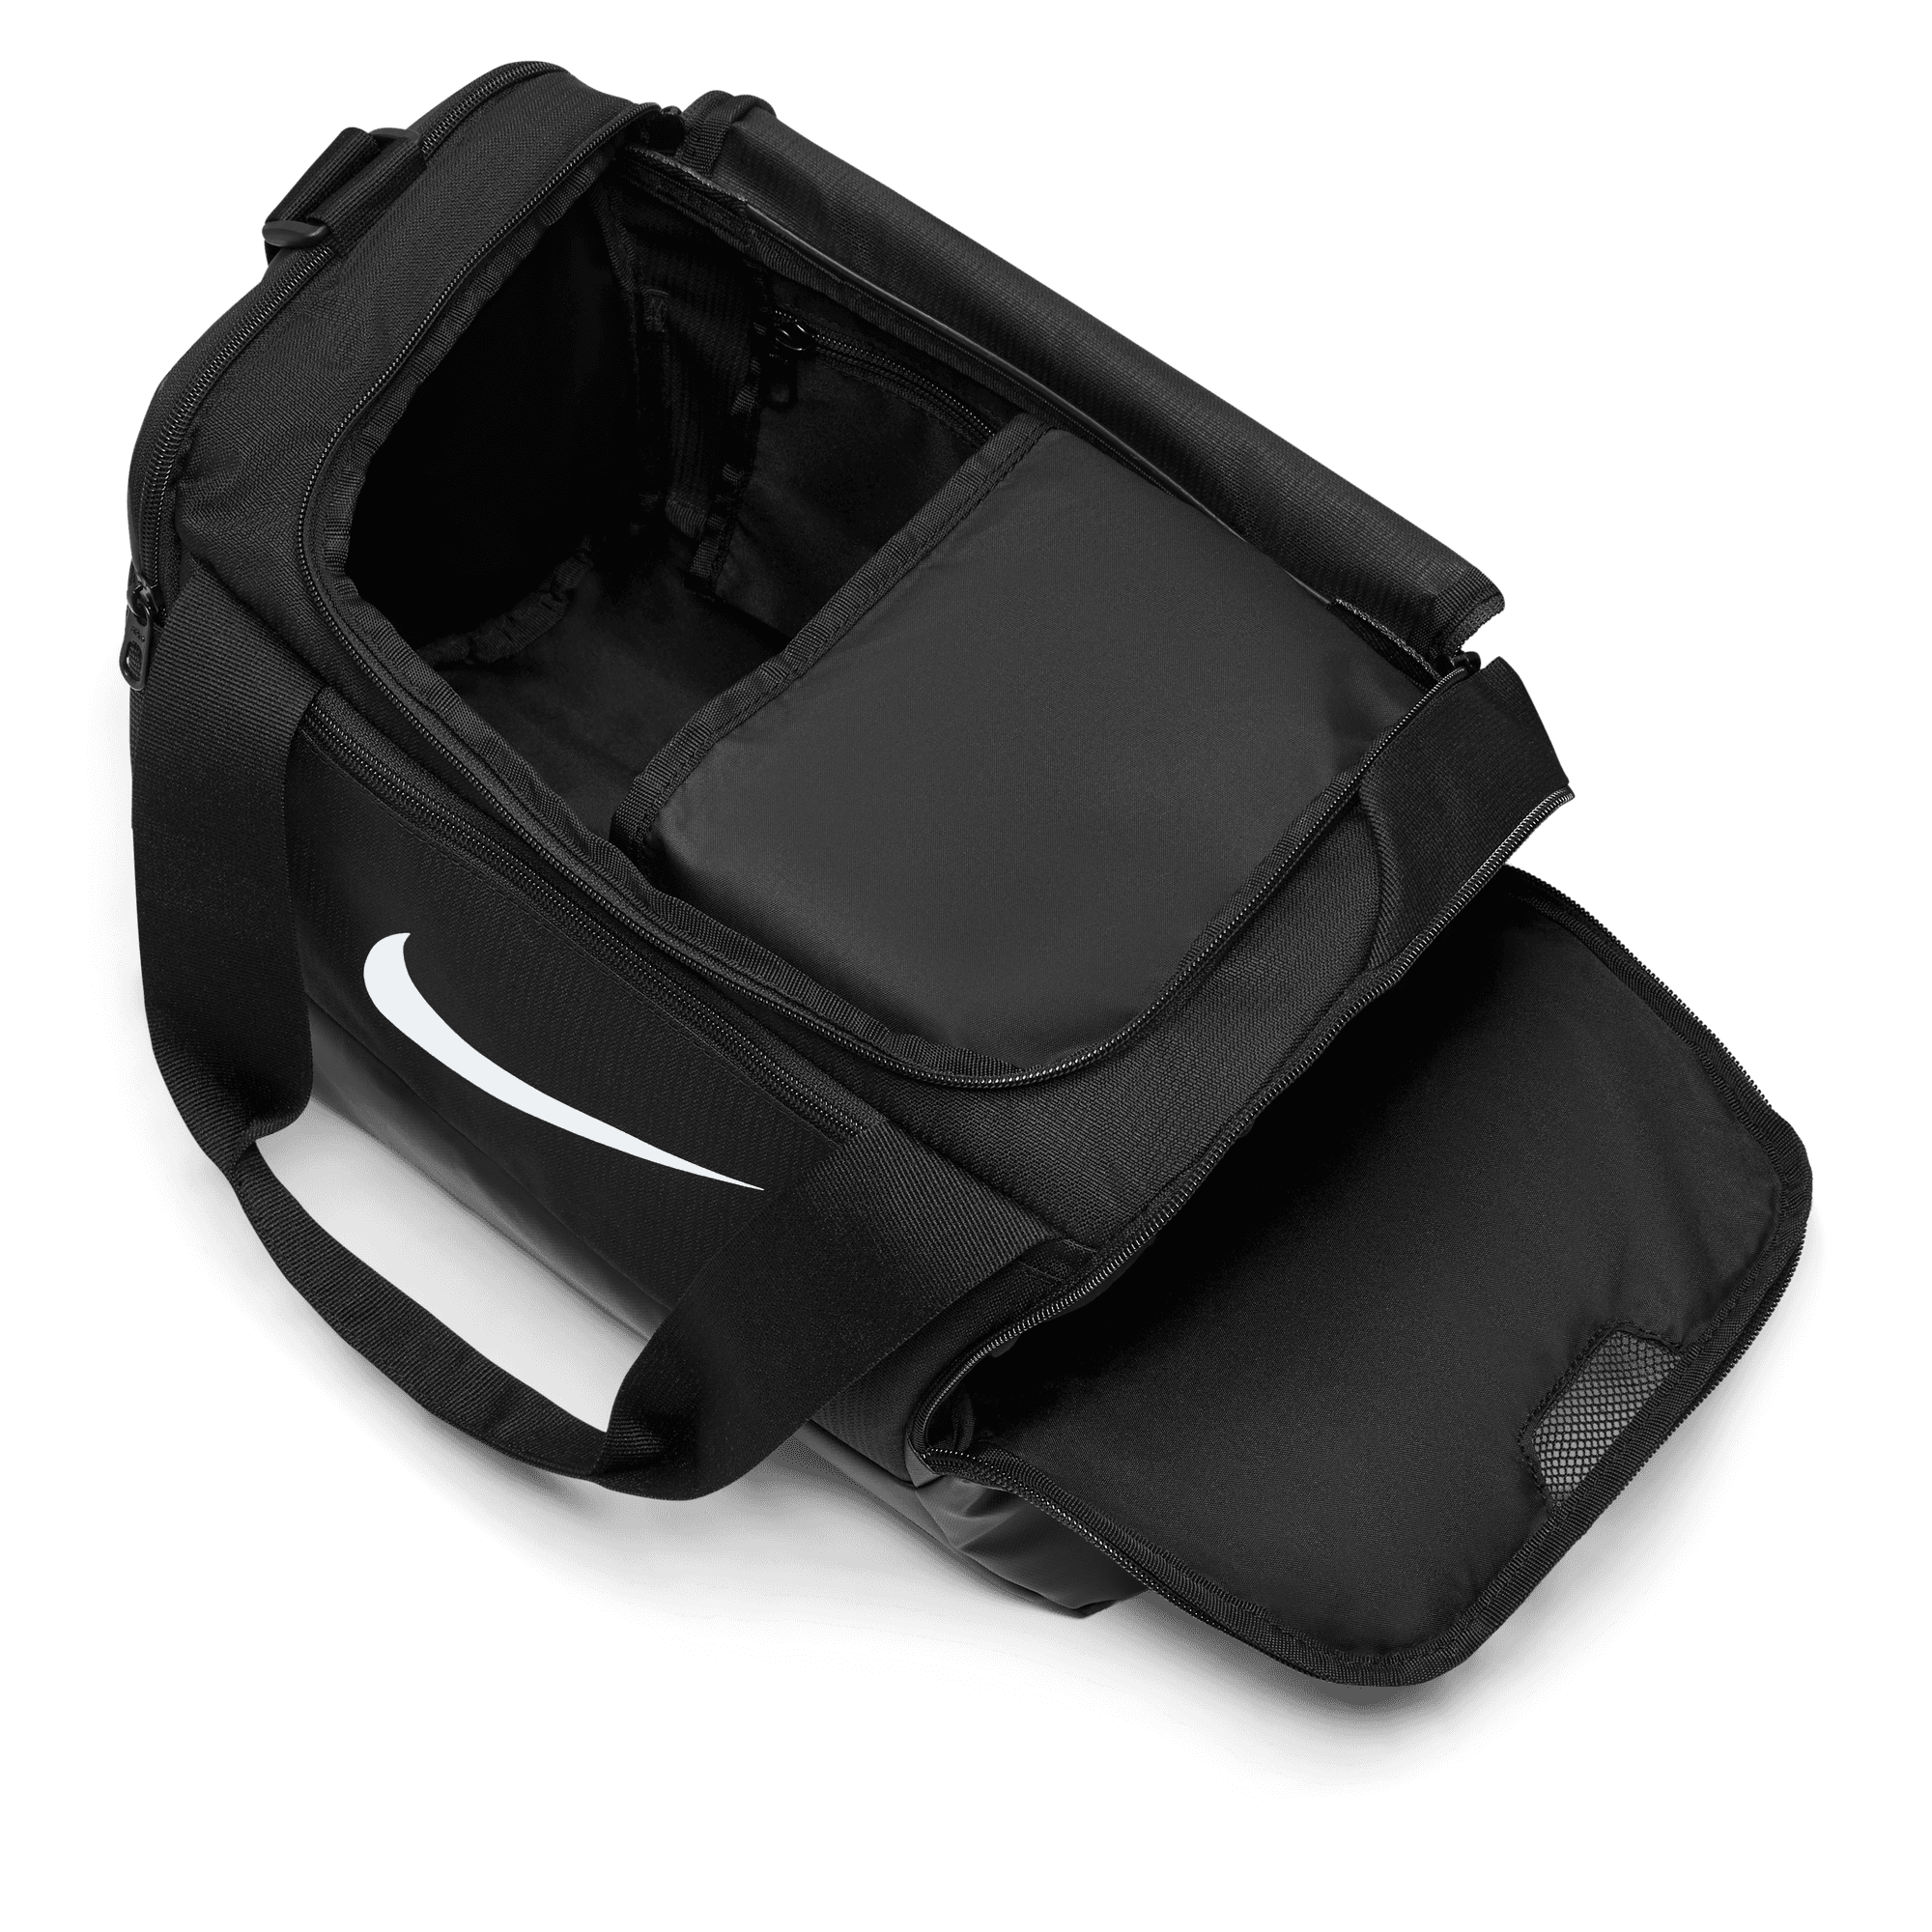 Nike Brasilia Training Duffel Bag (Extra-Small) (Light Blue/Black/White) :  : Sports & Outdoors